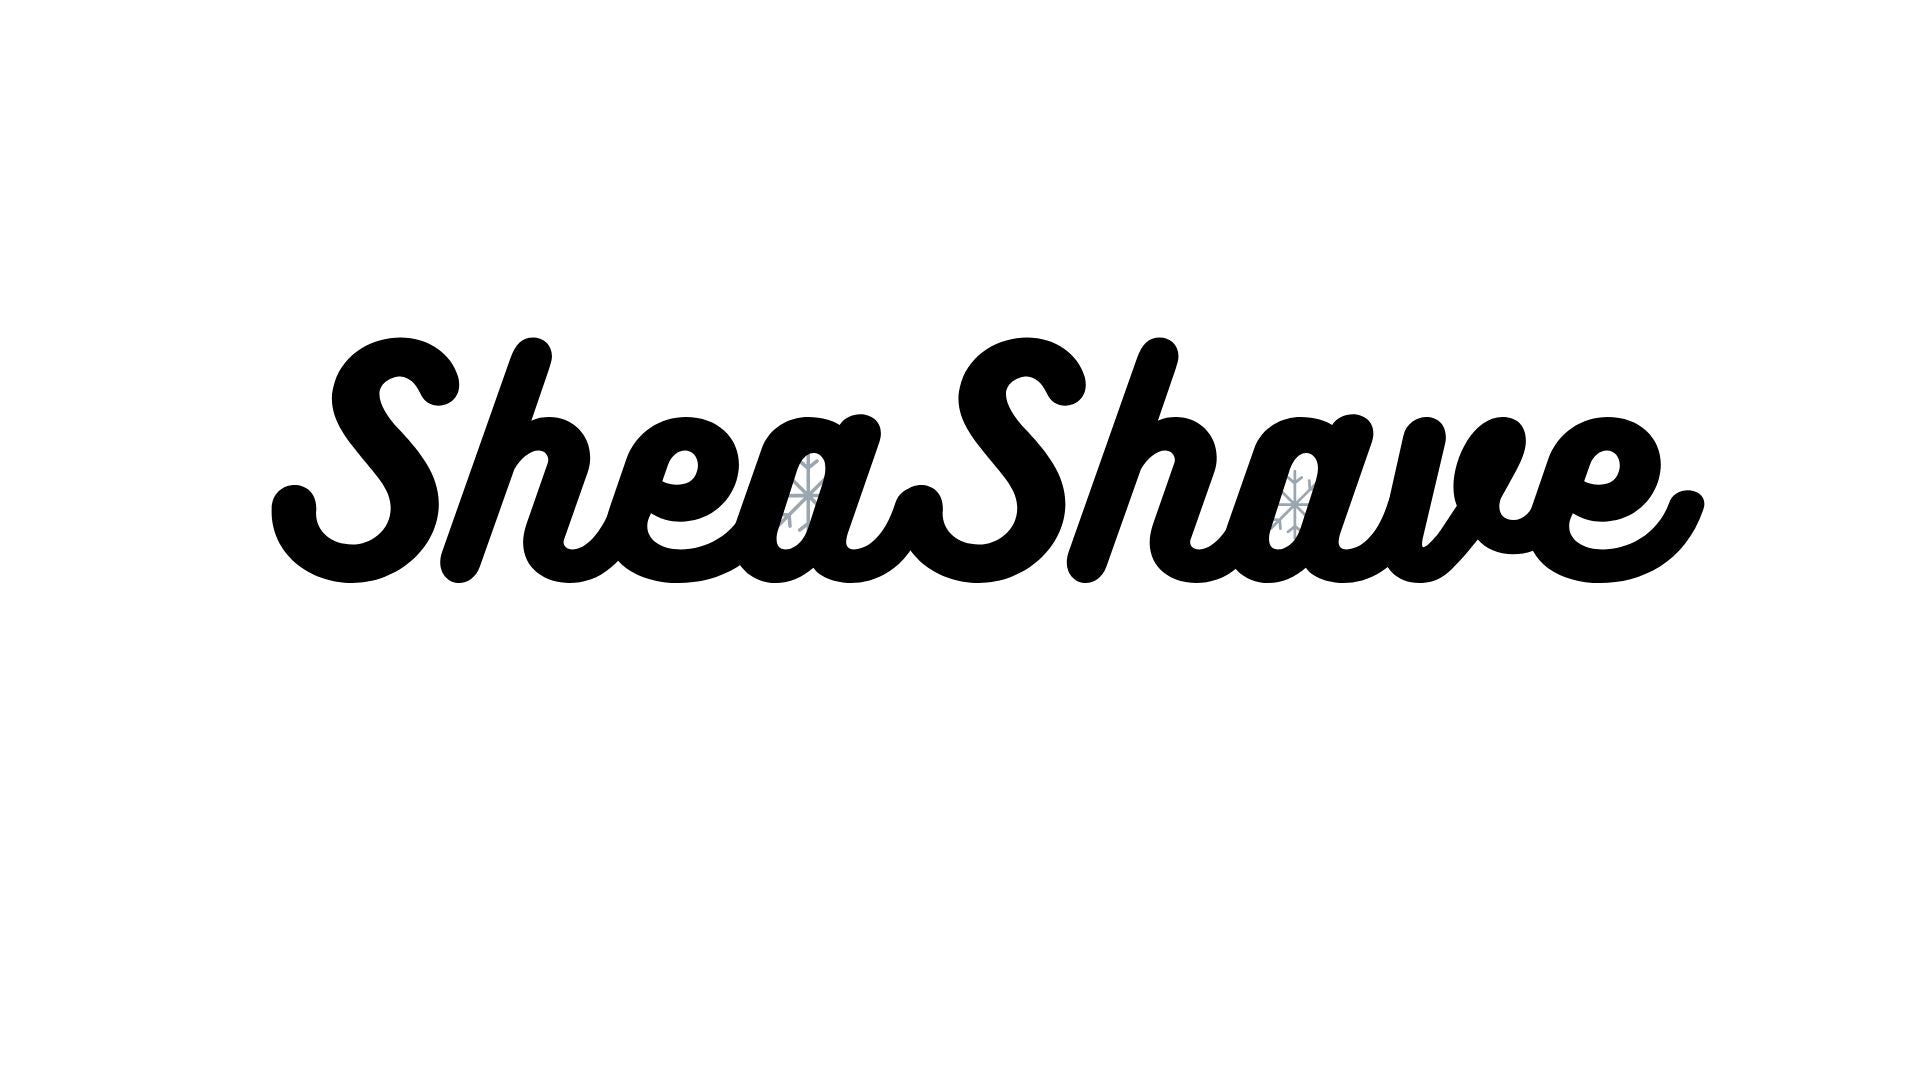 SheaShave